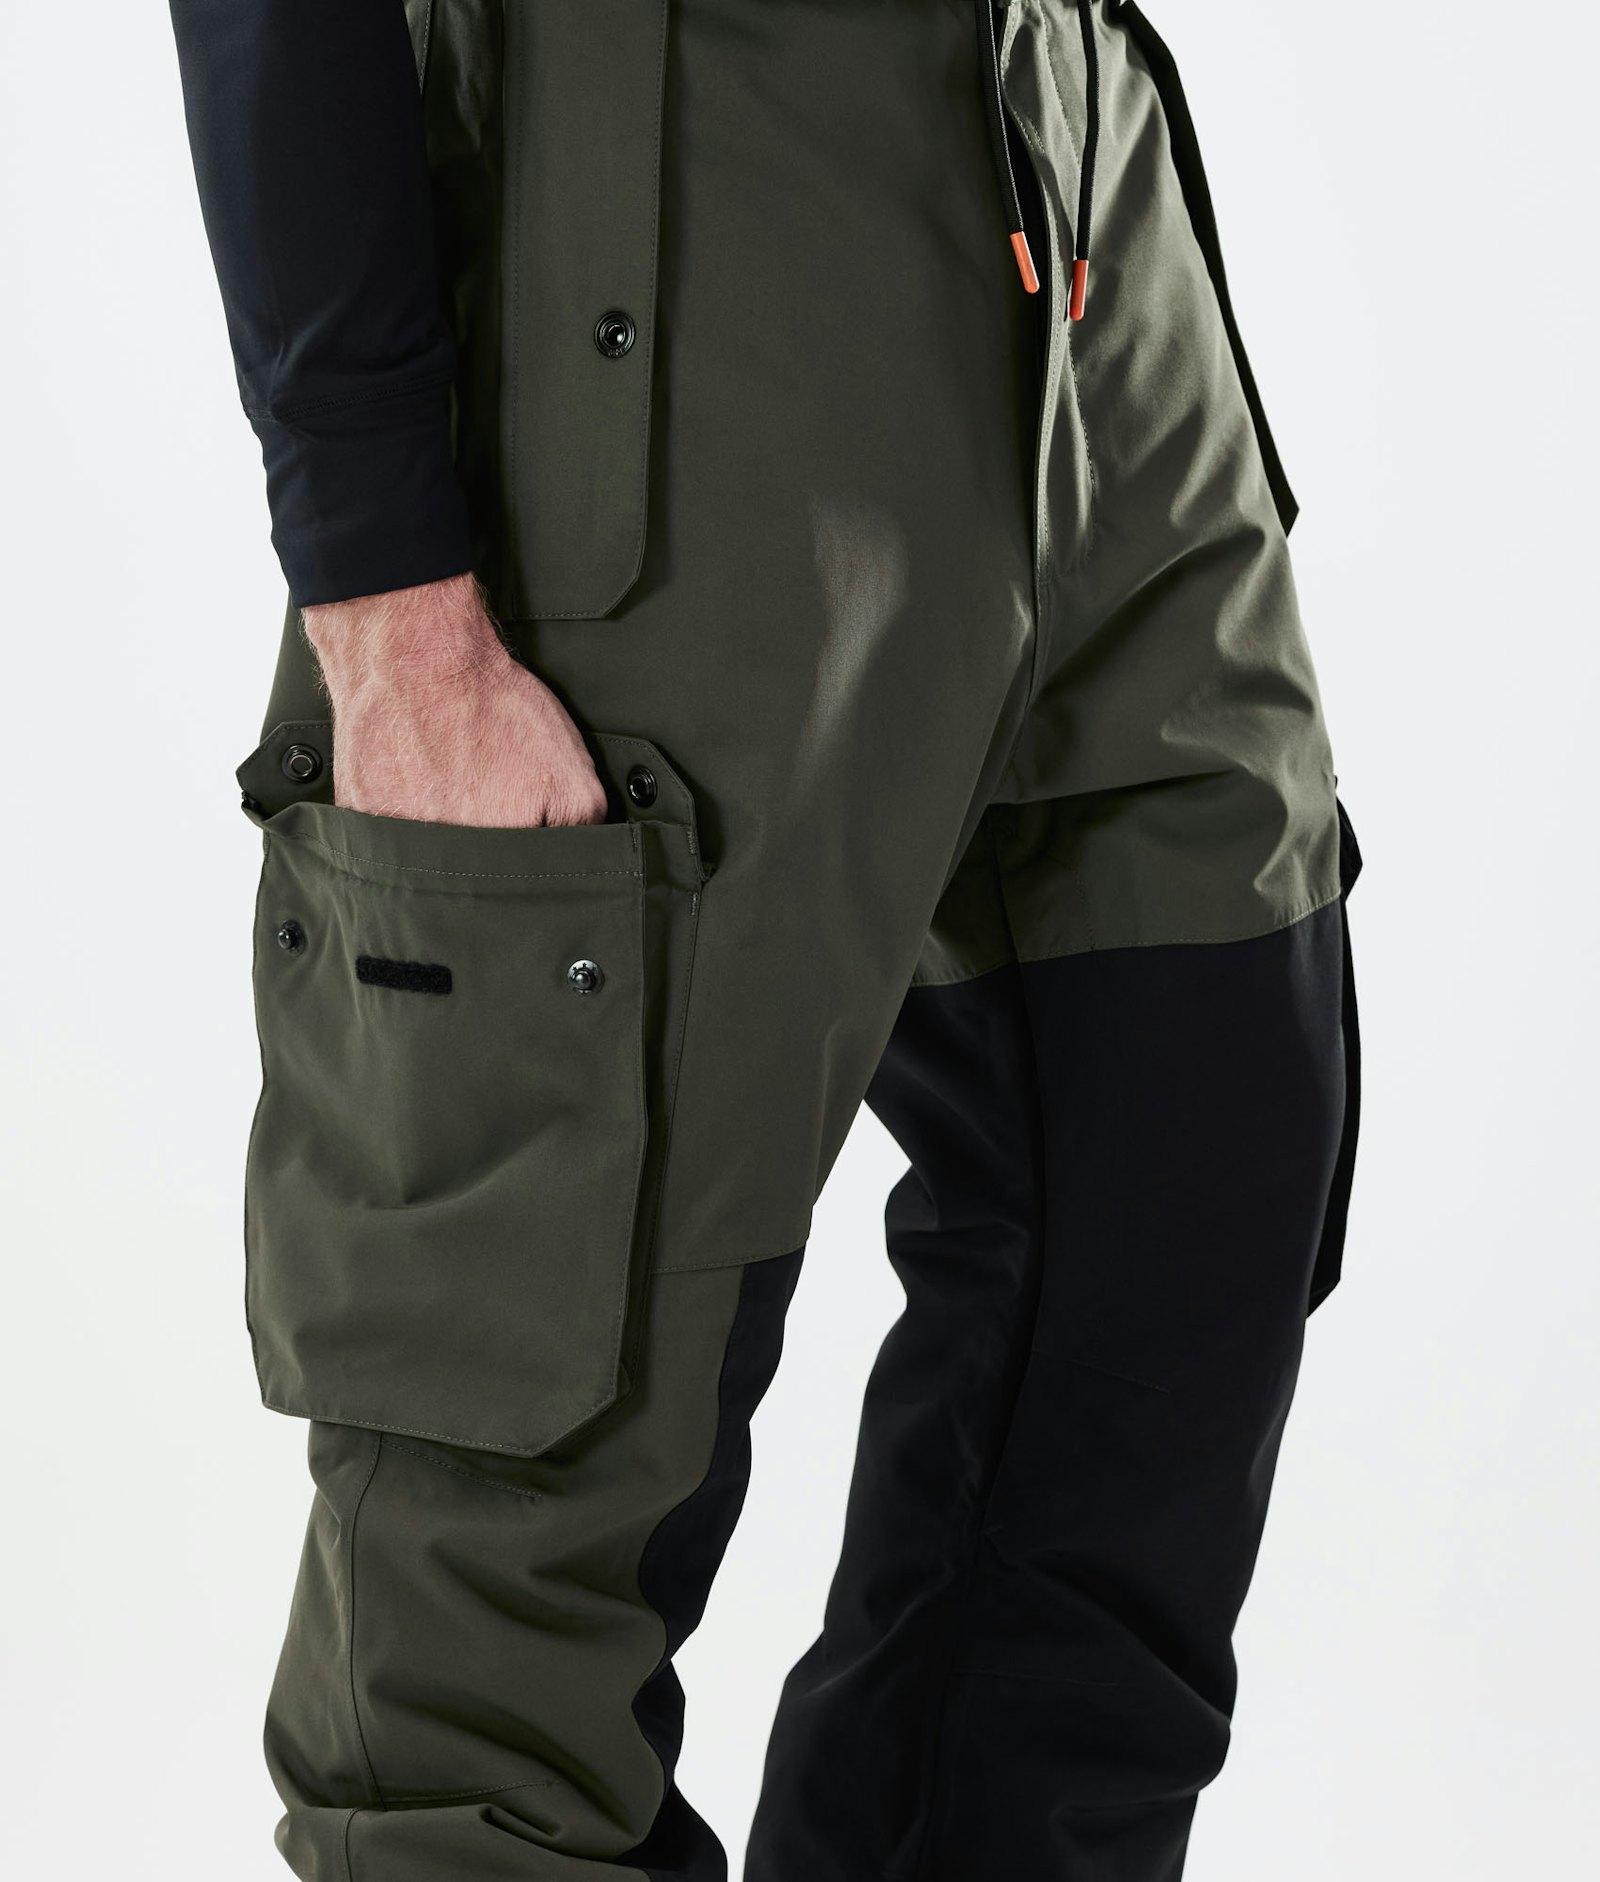 Adept 2021 Pantalon de Ski Homme Olive Green/Black